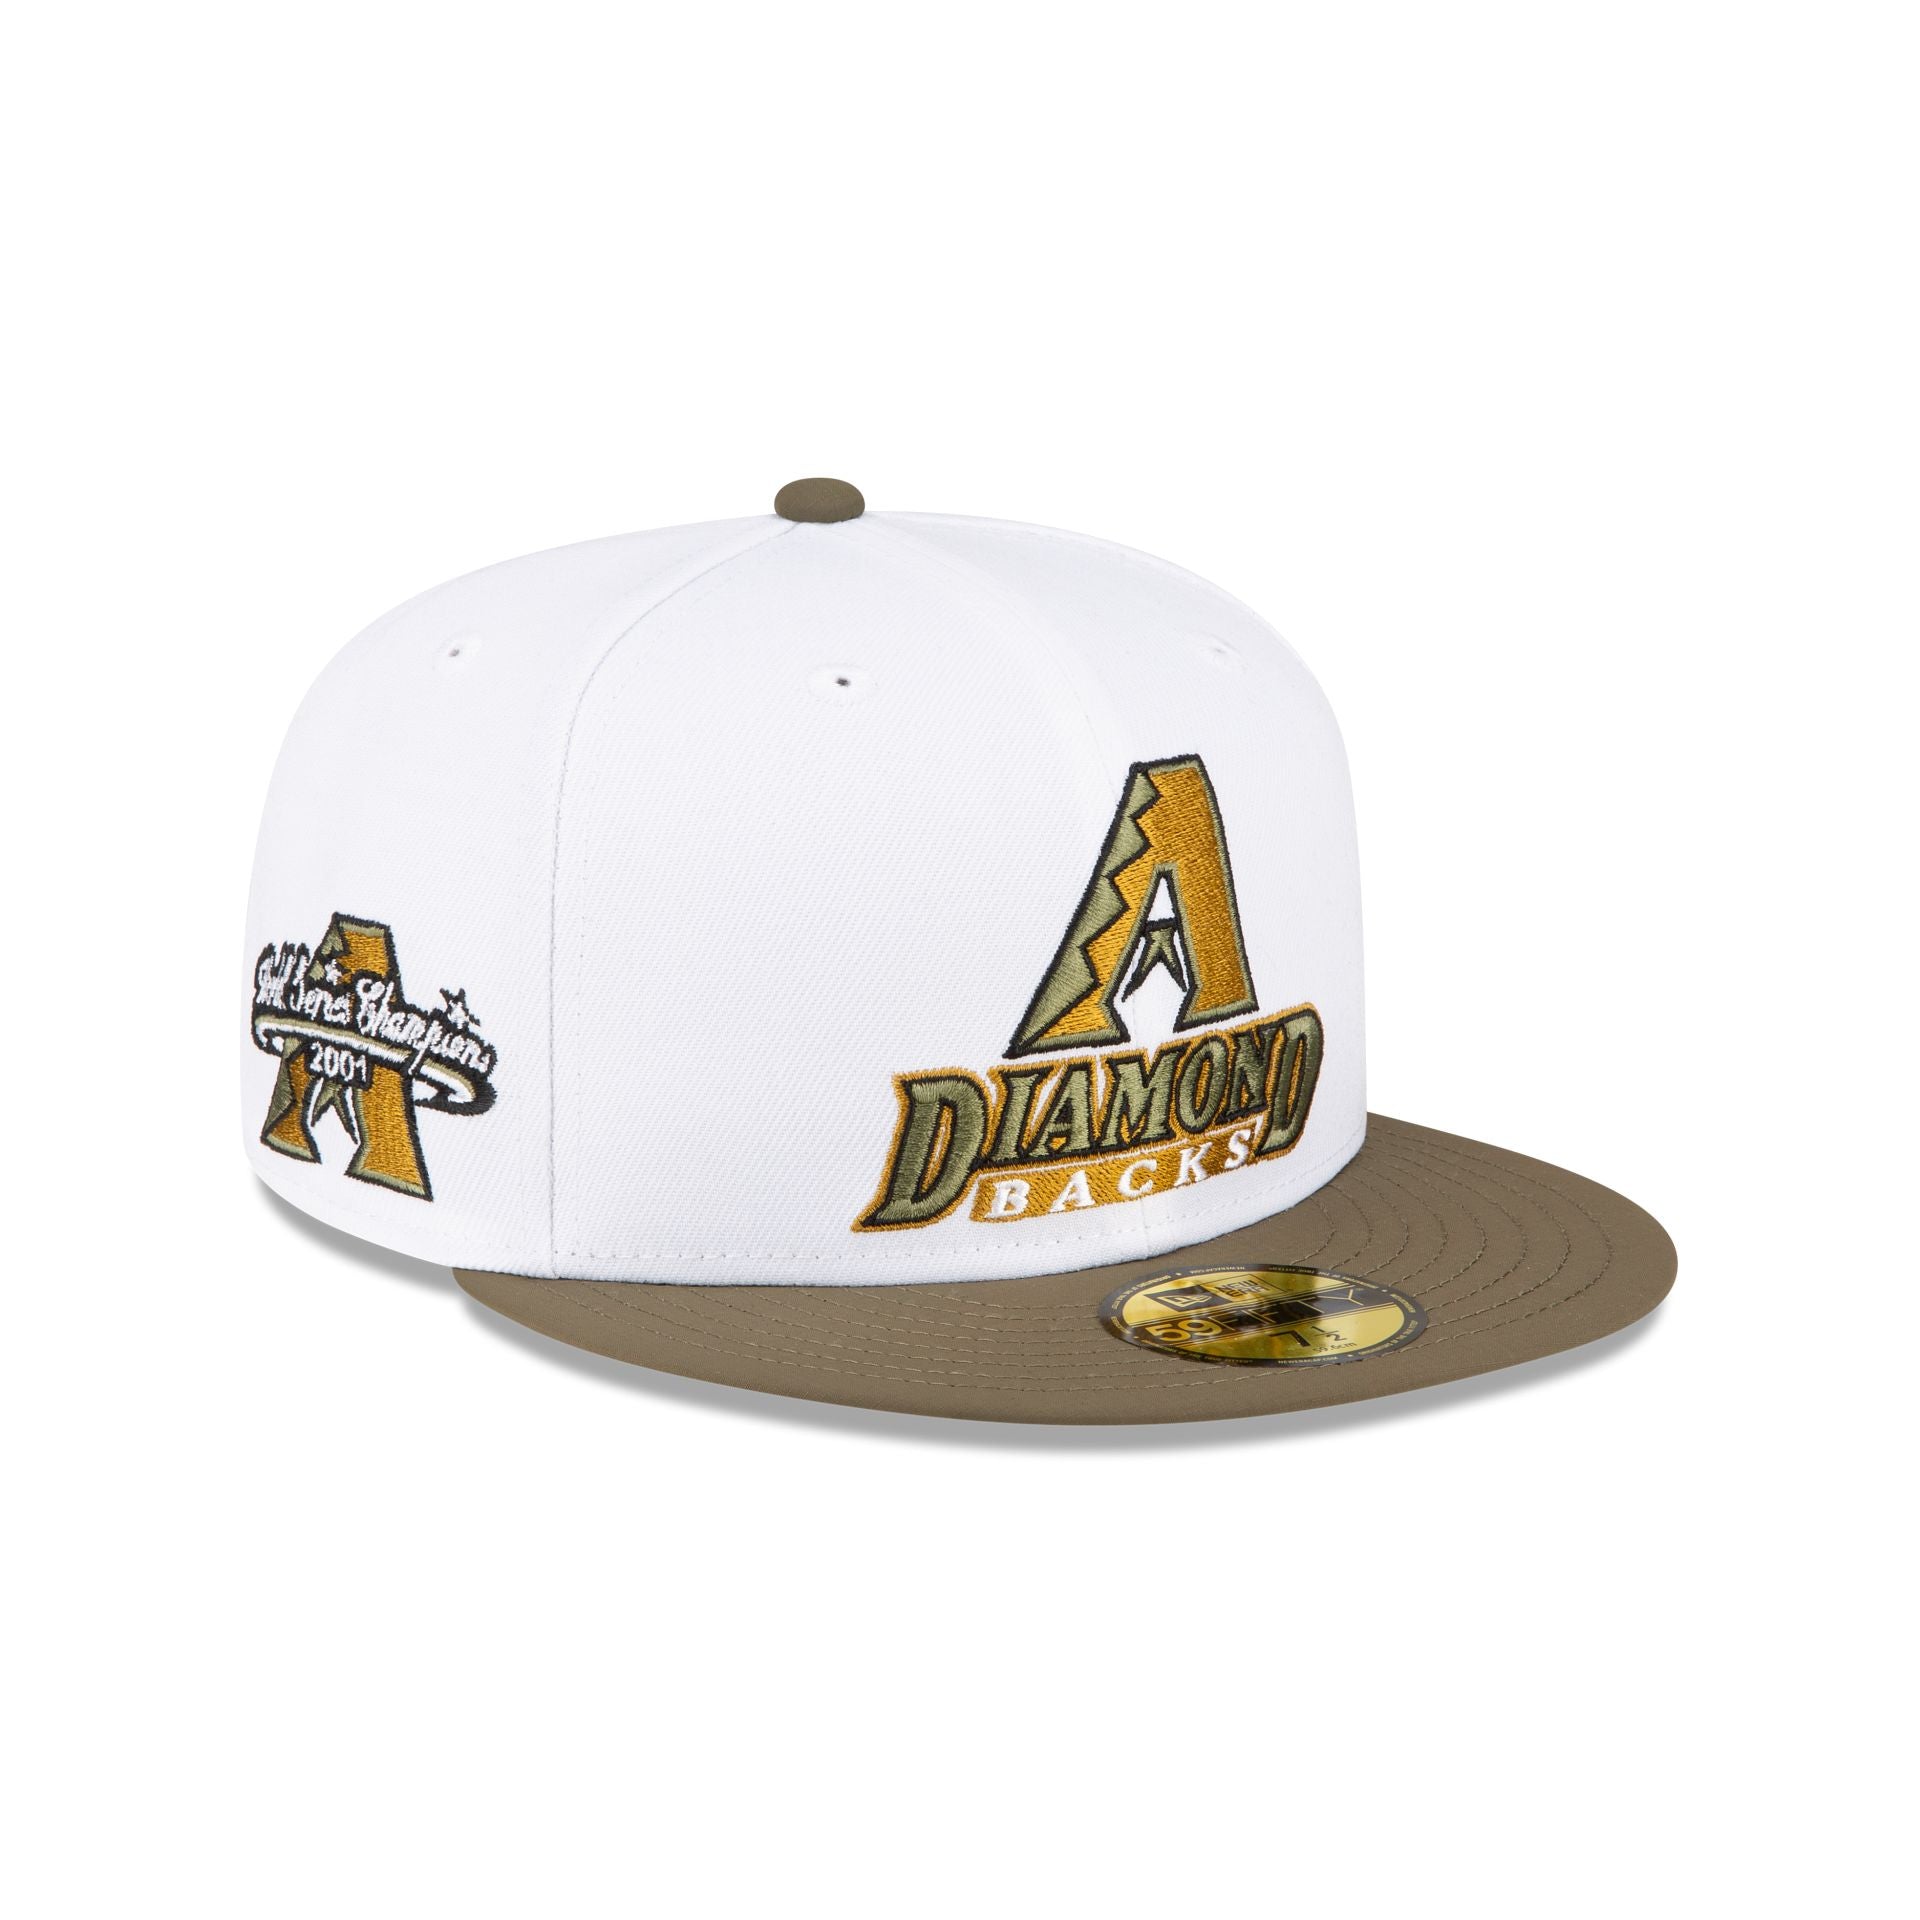 Cap New Diamondbacks – Arizona & Era Hats Caps